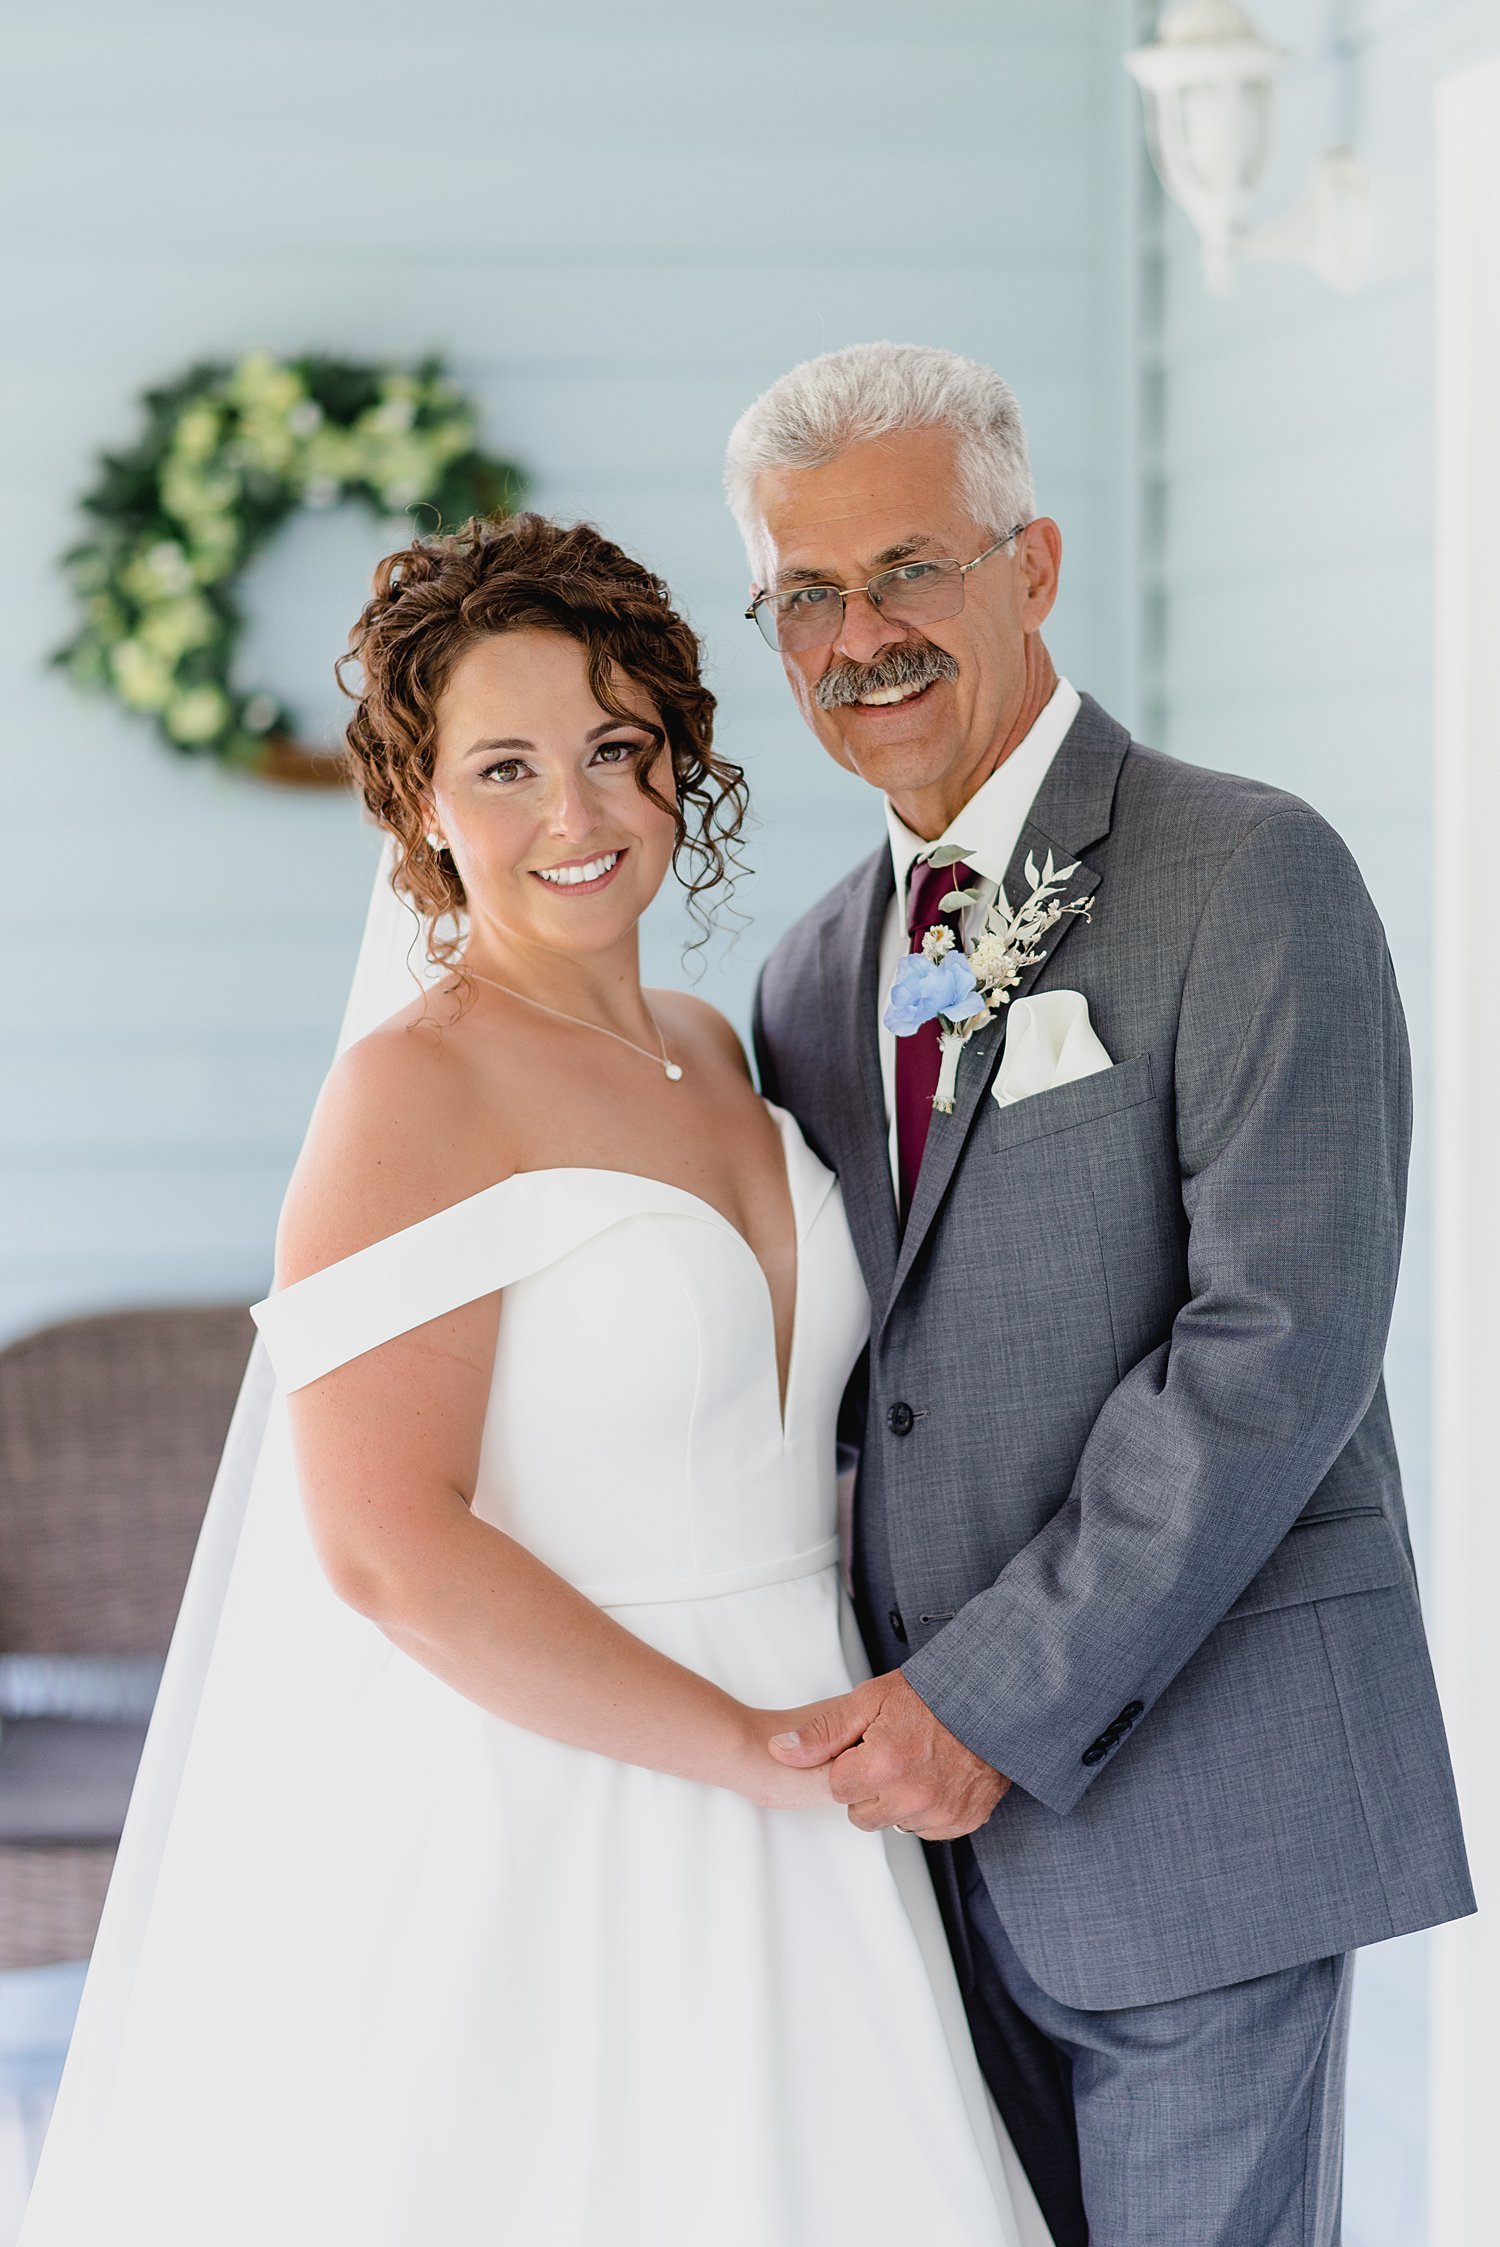 Elegant Summer Backyard Tented Wedding in Sydenham, Ontario | Prince Edward County Wedding Photographer | Holly McMurter Photographs_0011.jpg